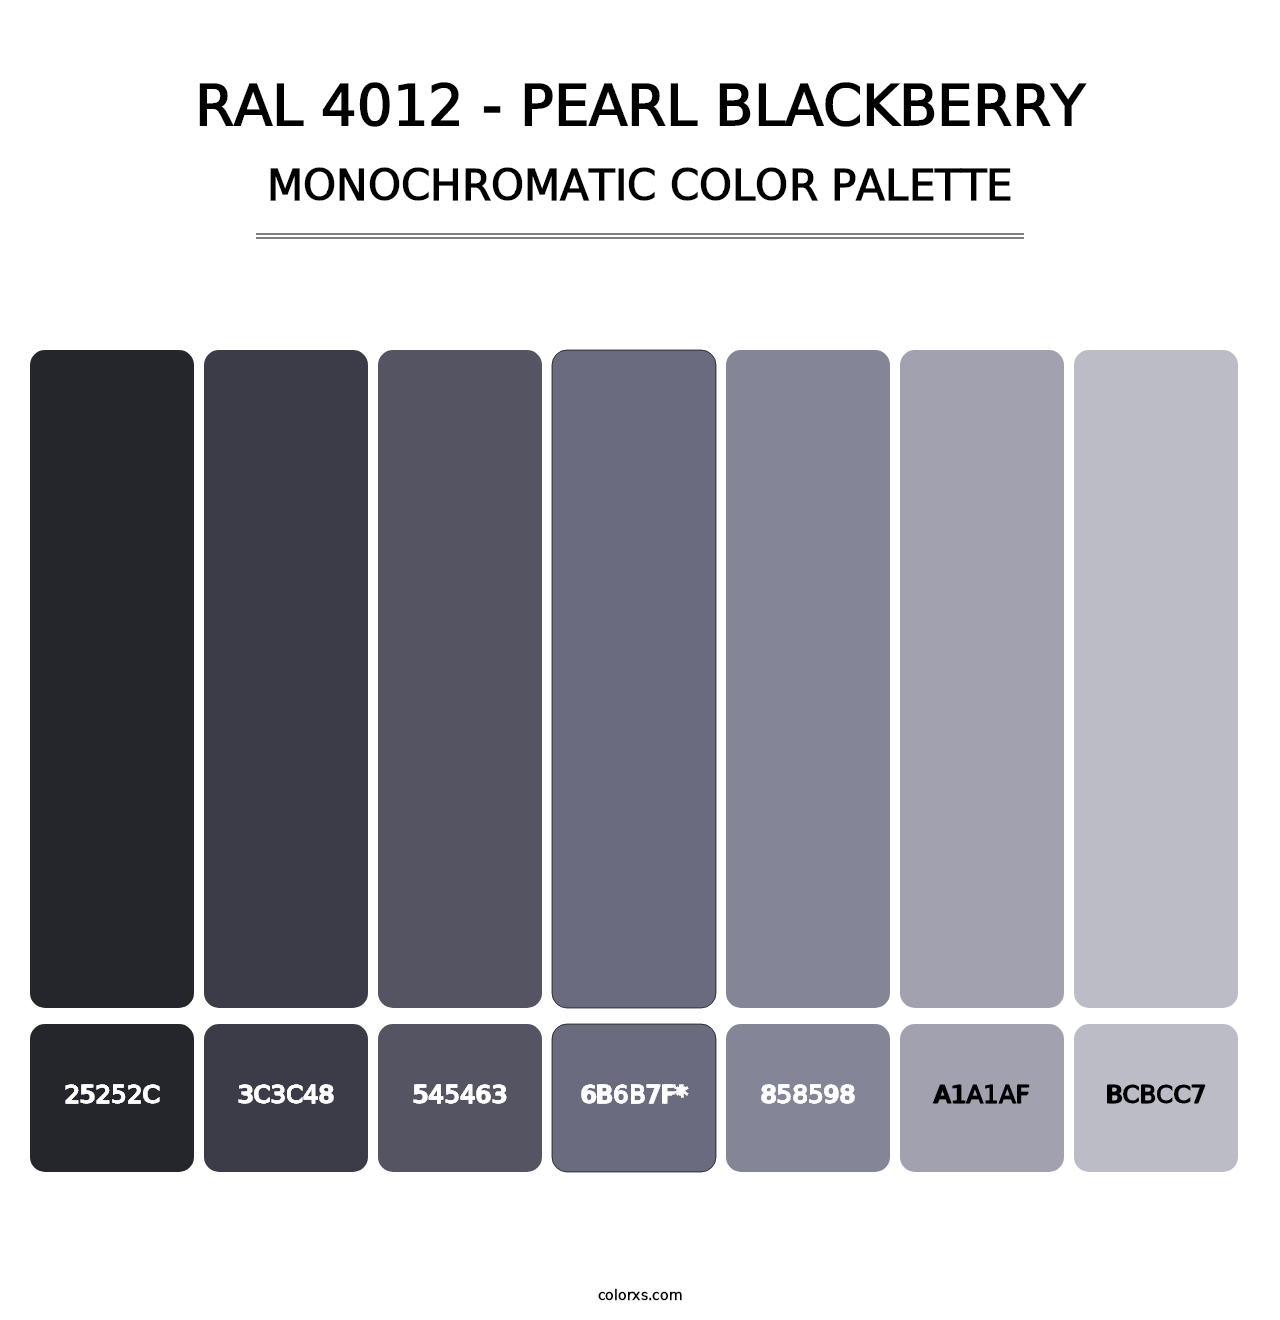 RAL 4012 - Pearl Blackberry - Monochromatic Color Palette